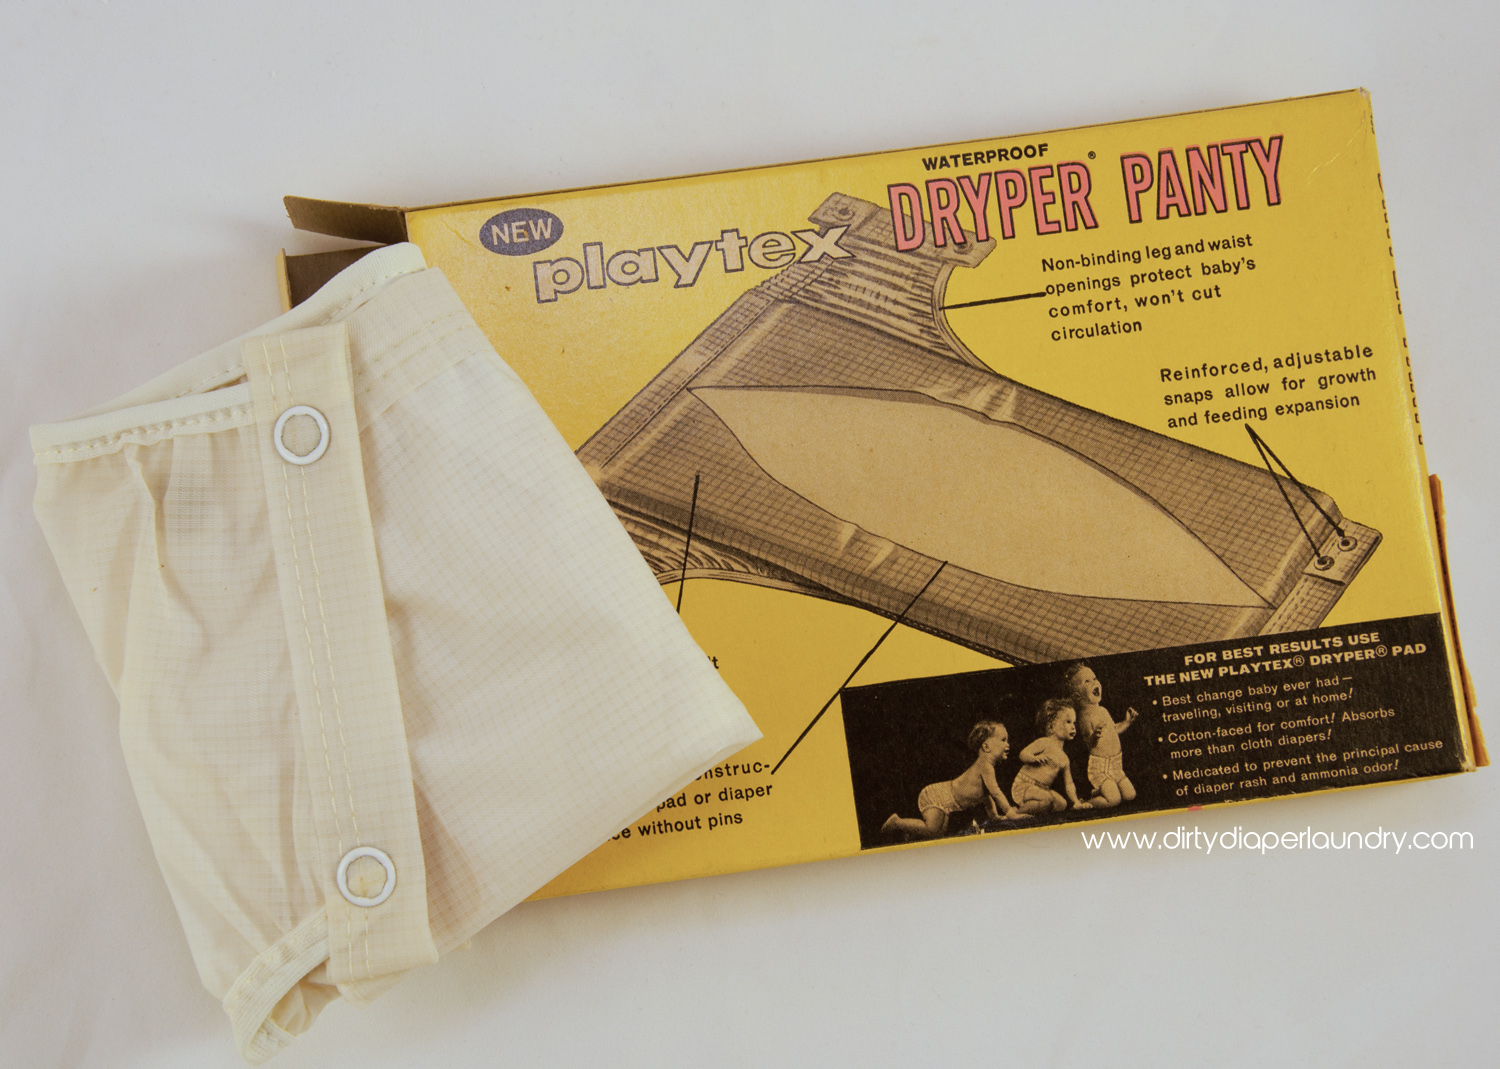 Early Hybrid Cloth Diaper 1950's